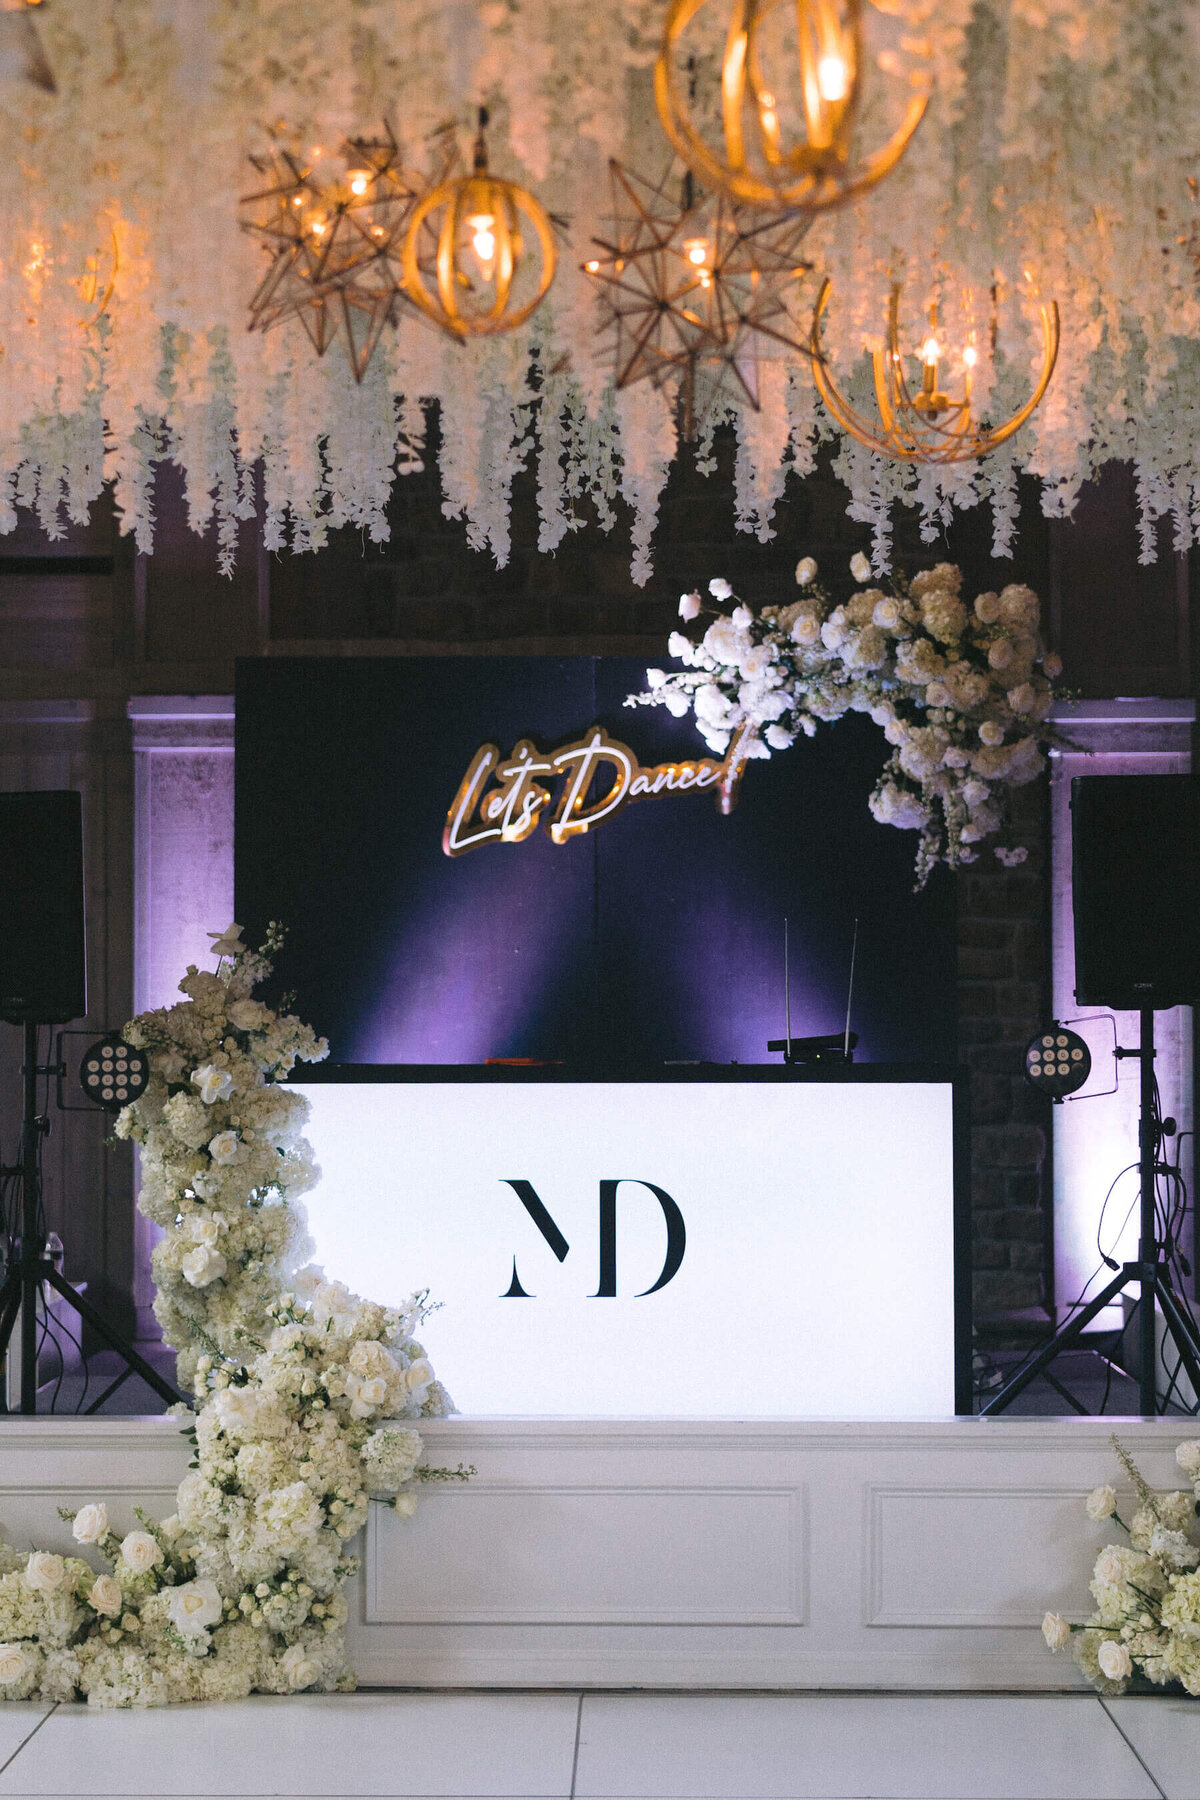 Custom light up LED DJ booth at wedding